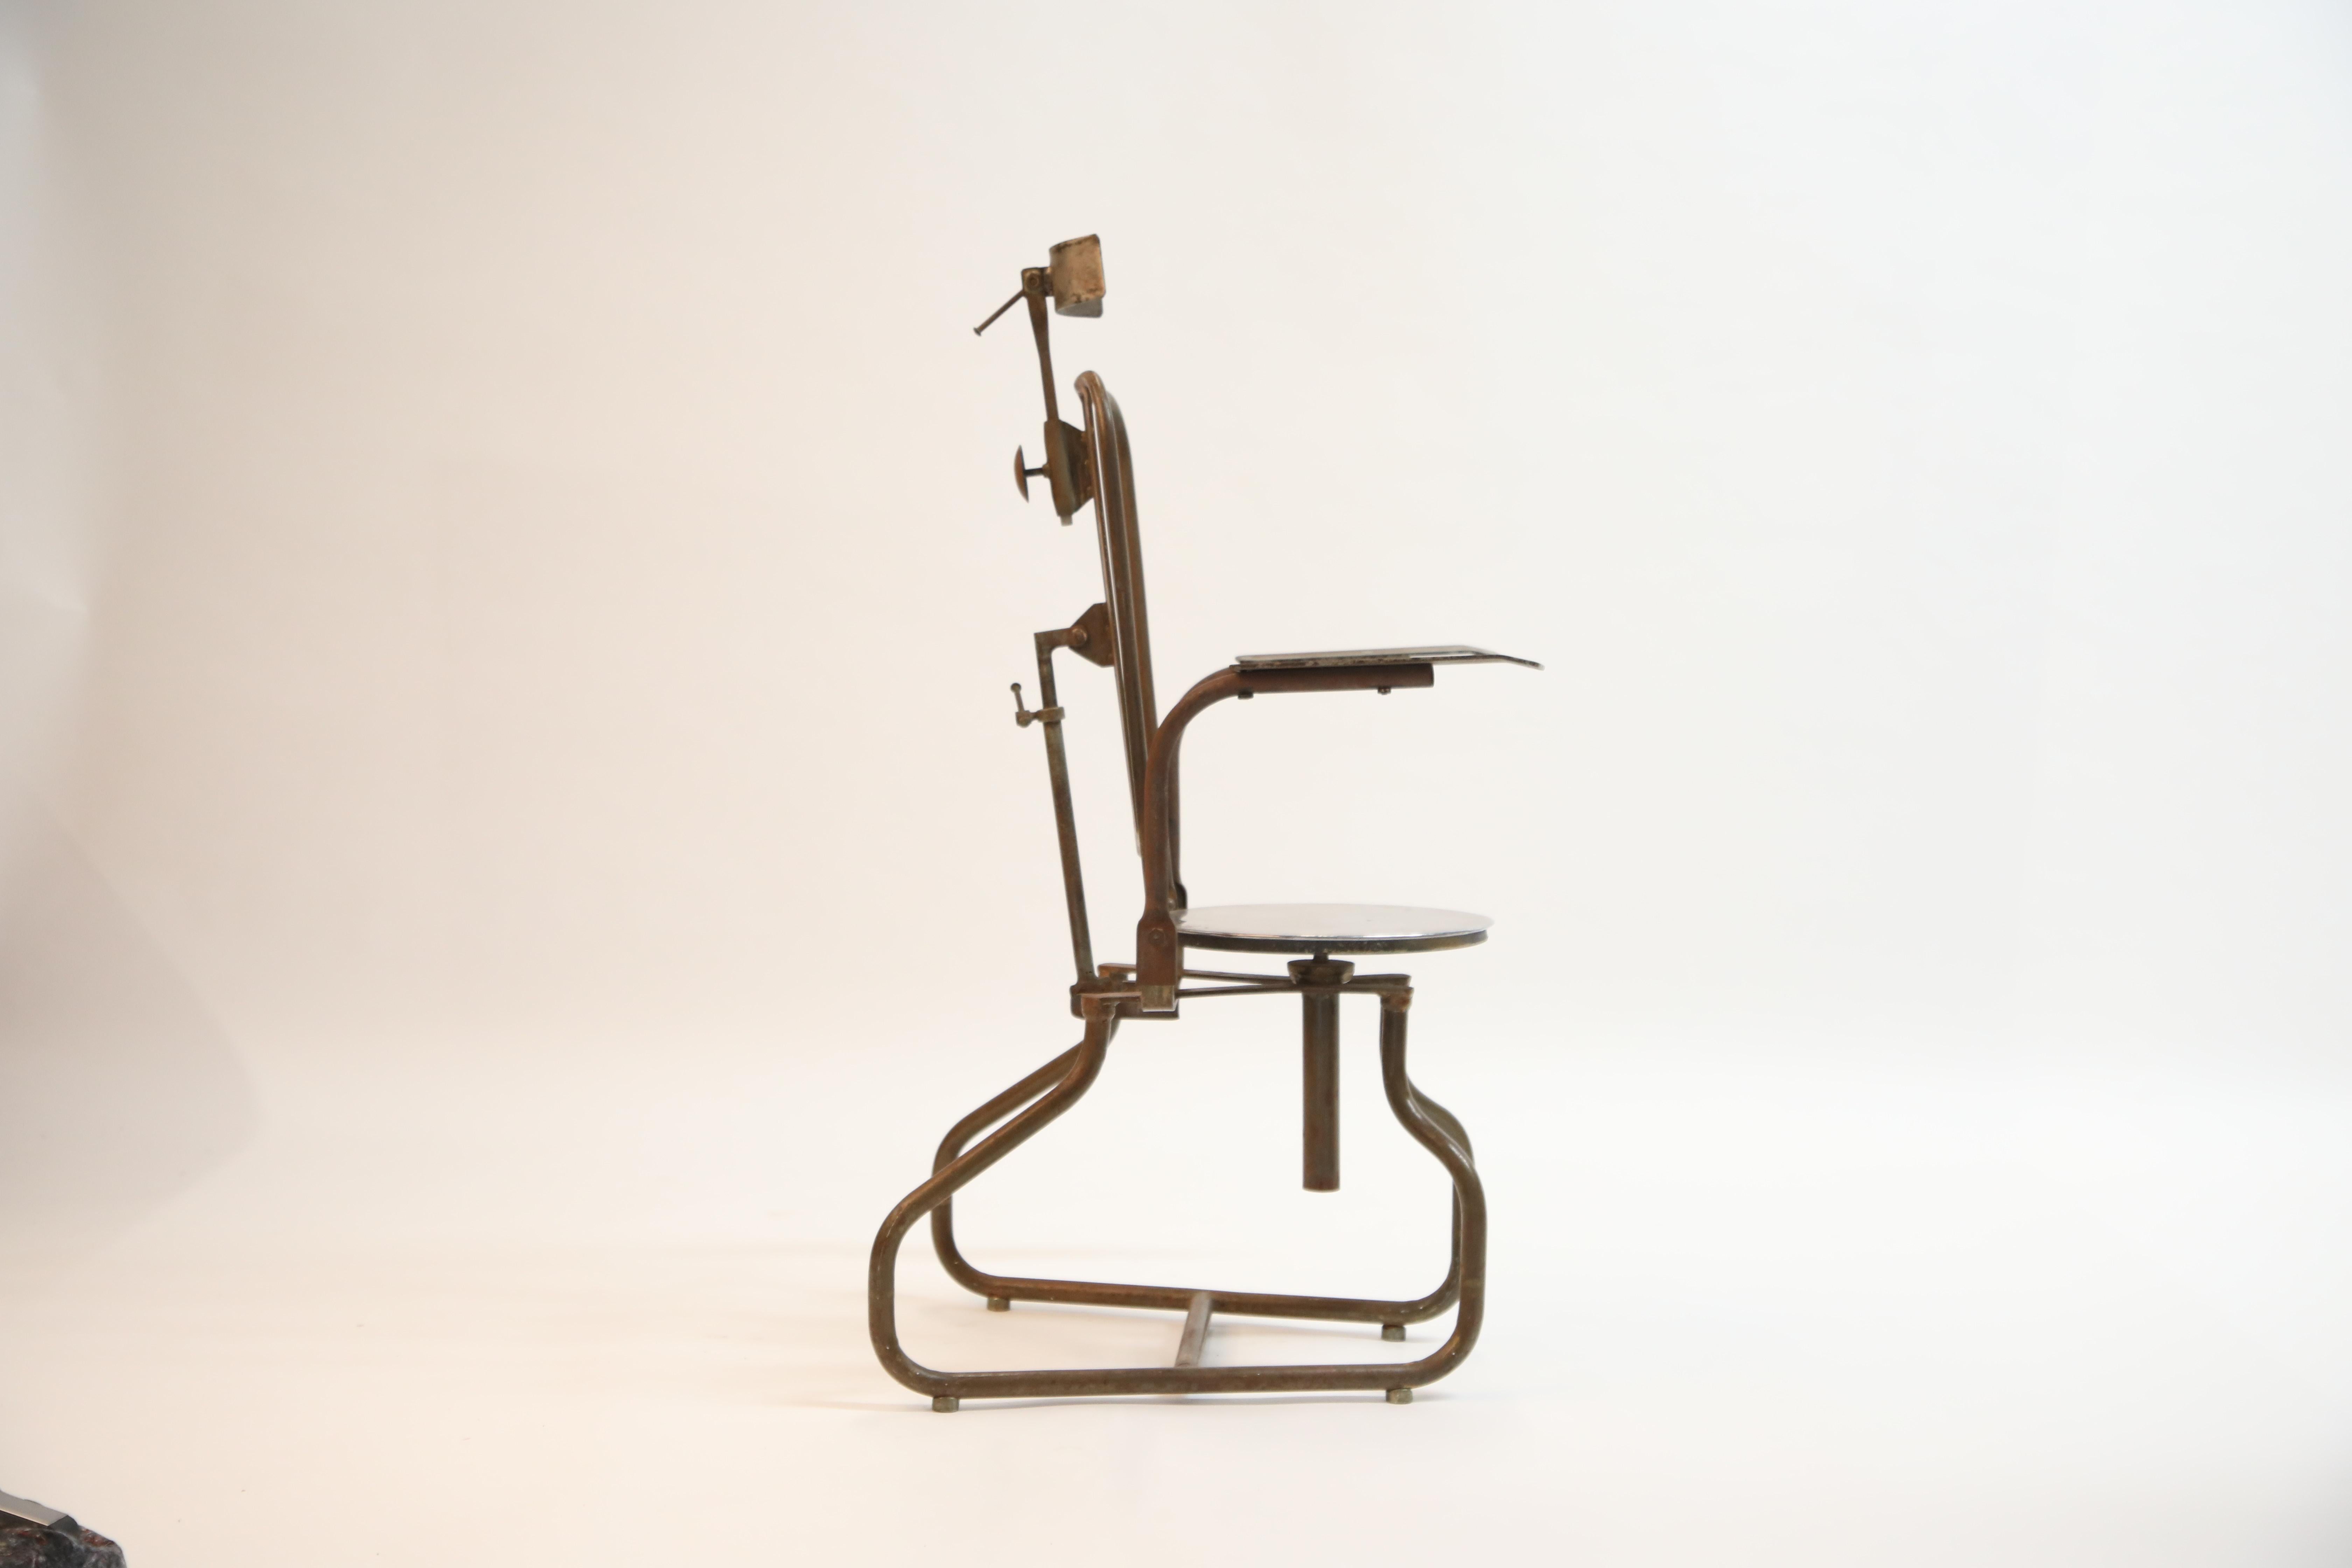 Brazilian Industrial Steel Dentist Chair or Sculpture from Brazil, circa 1900s